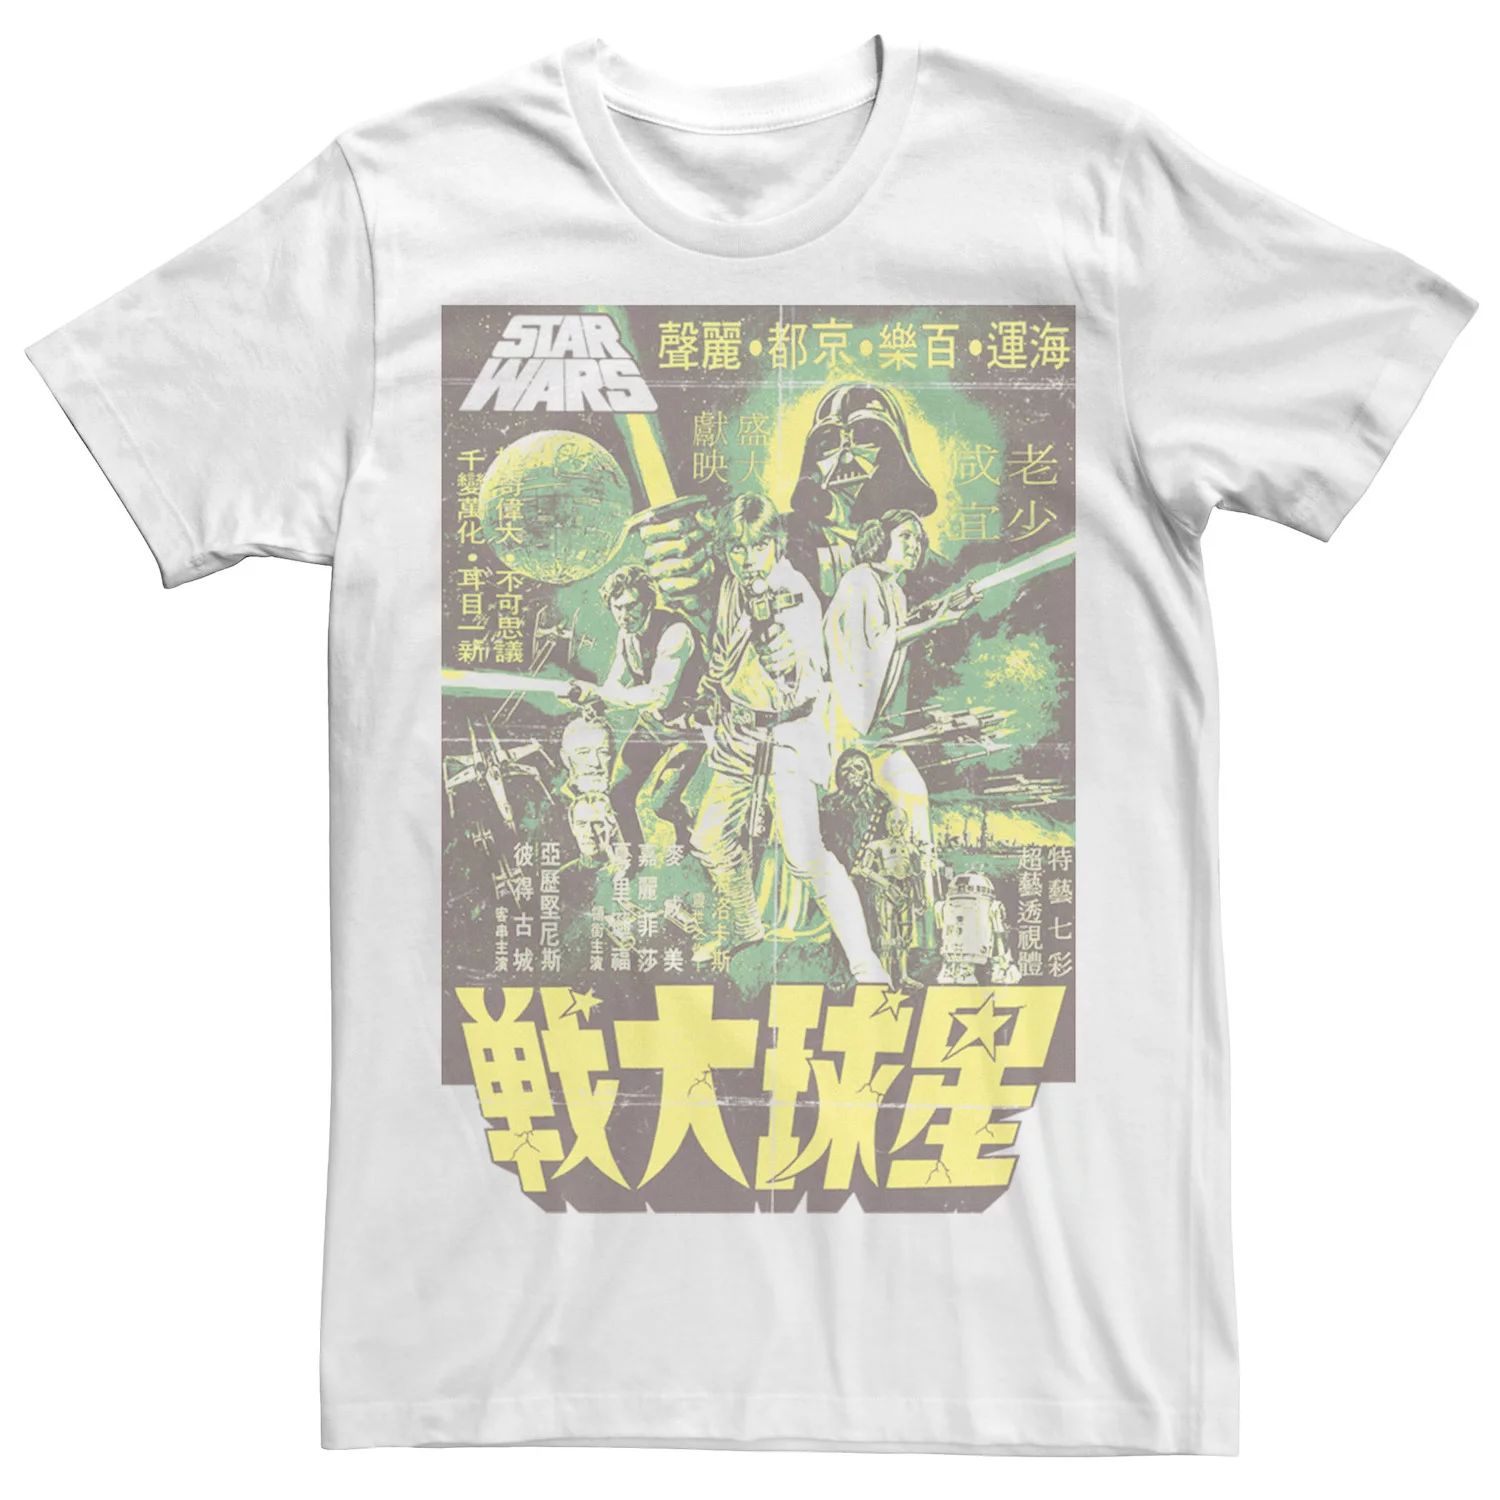 Мужская винтажная футболка с плакатом зеленого оттенка кандзи Star Wars